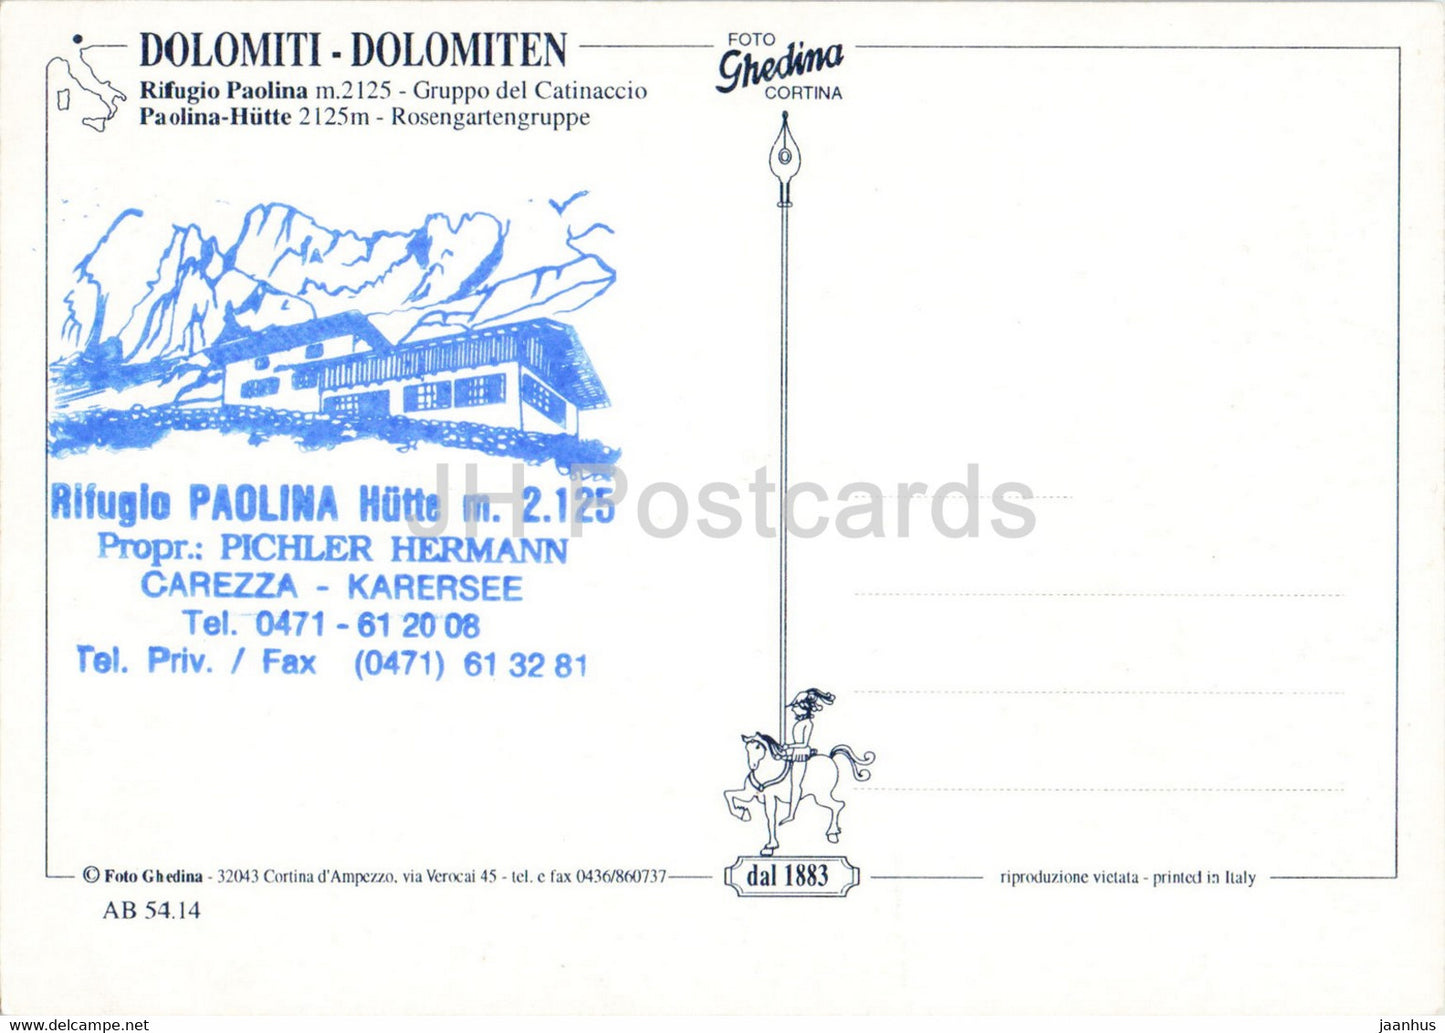 Dolomiti - Rifugio Paolina Hutte - Catinaccio - Rosengarten - Italy - unused